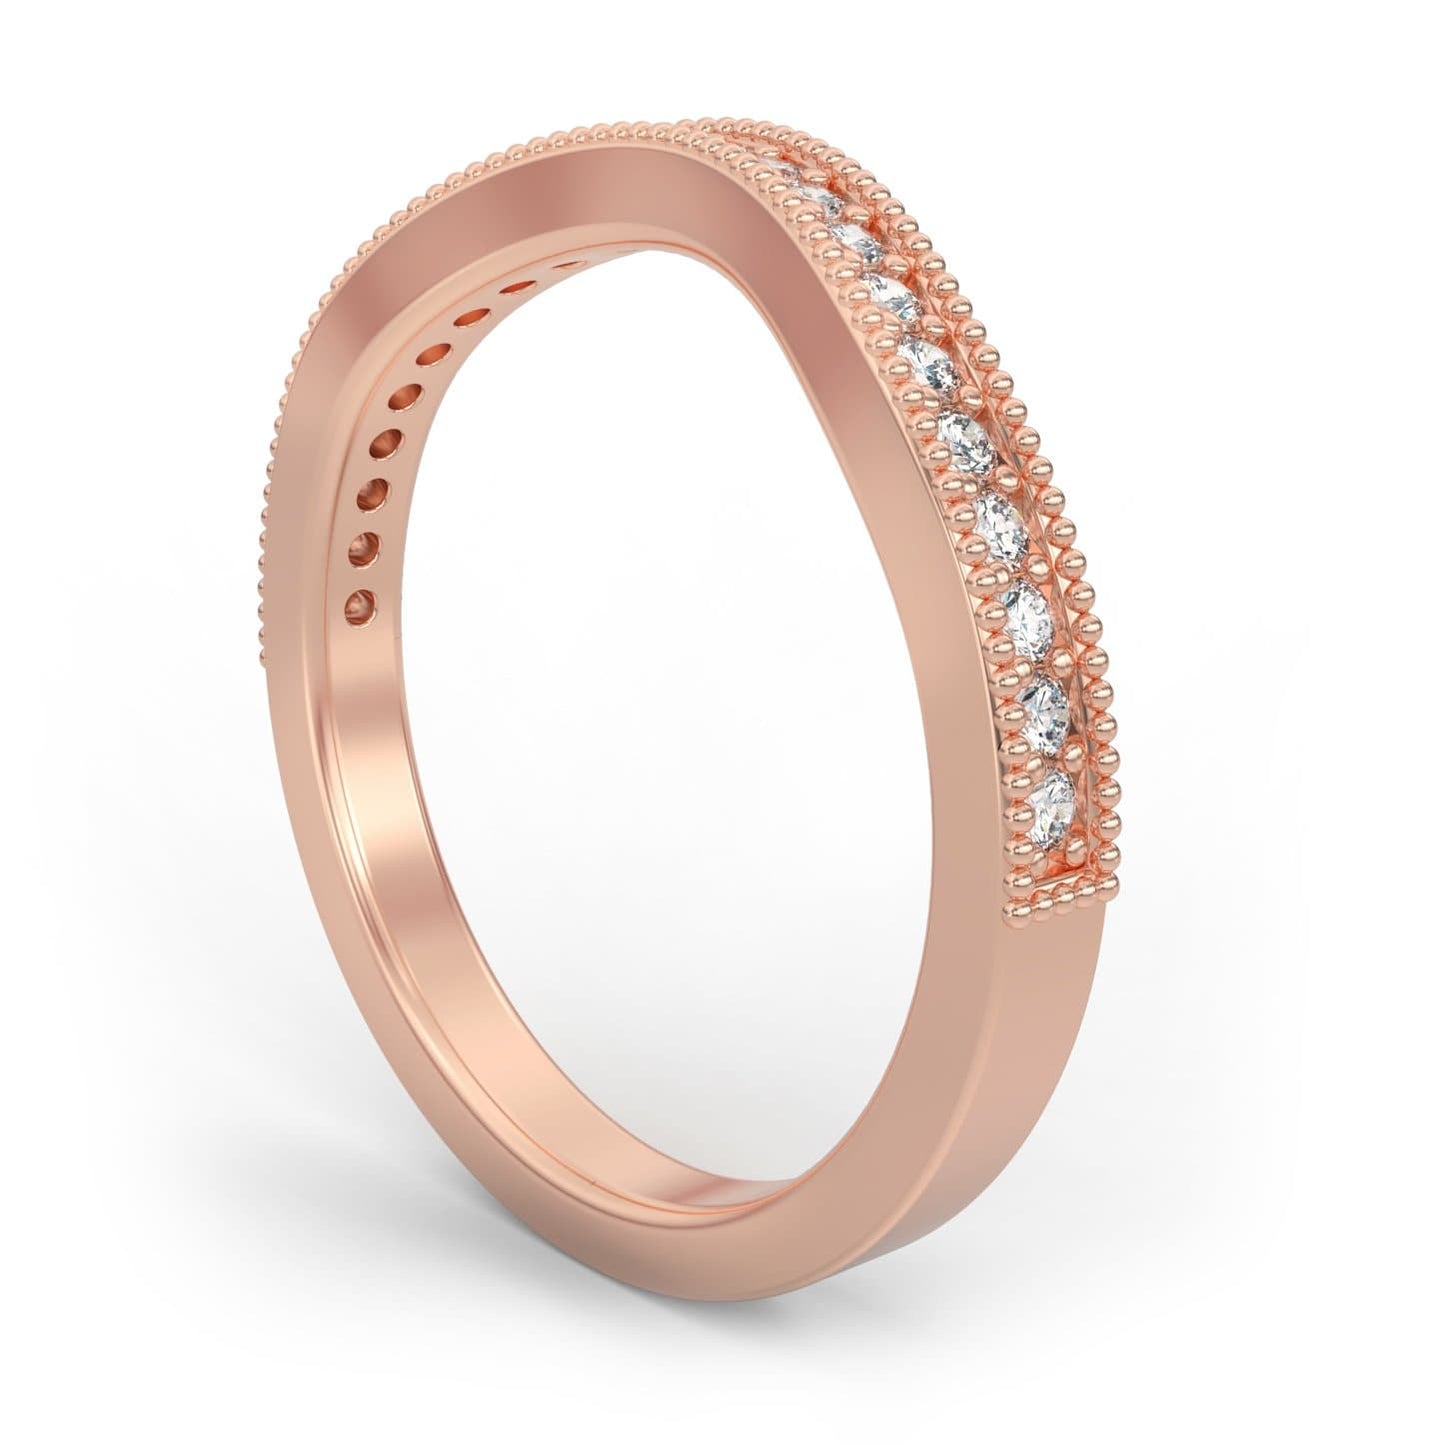 Curved Semi-Eternity Diamond Ring in 14k Gold